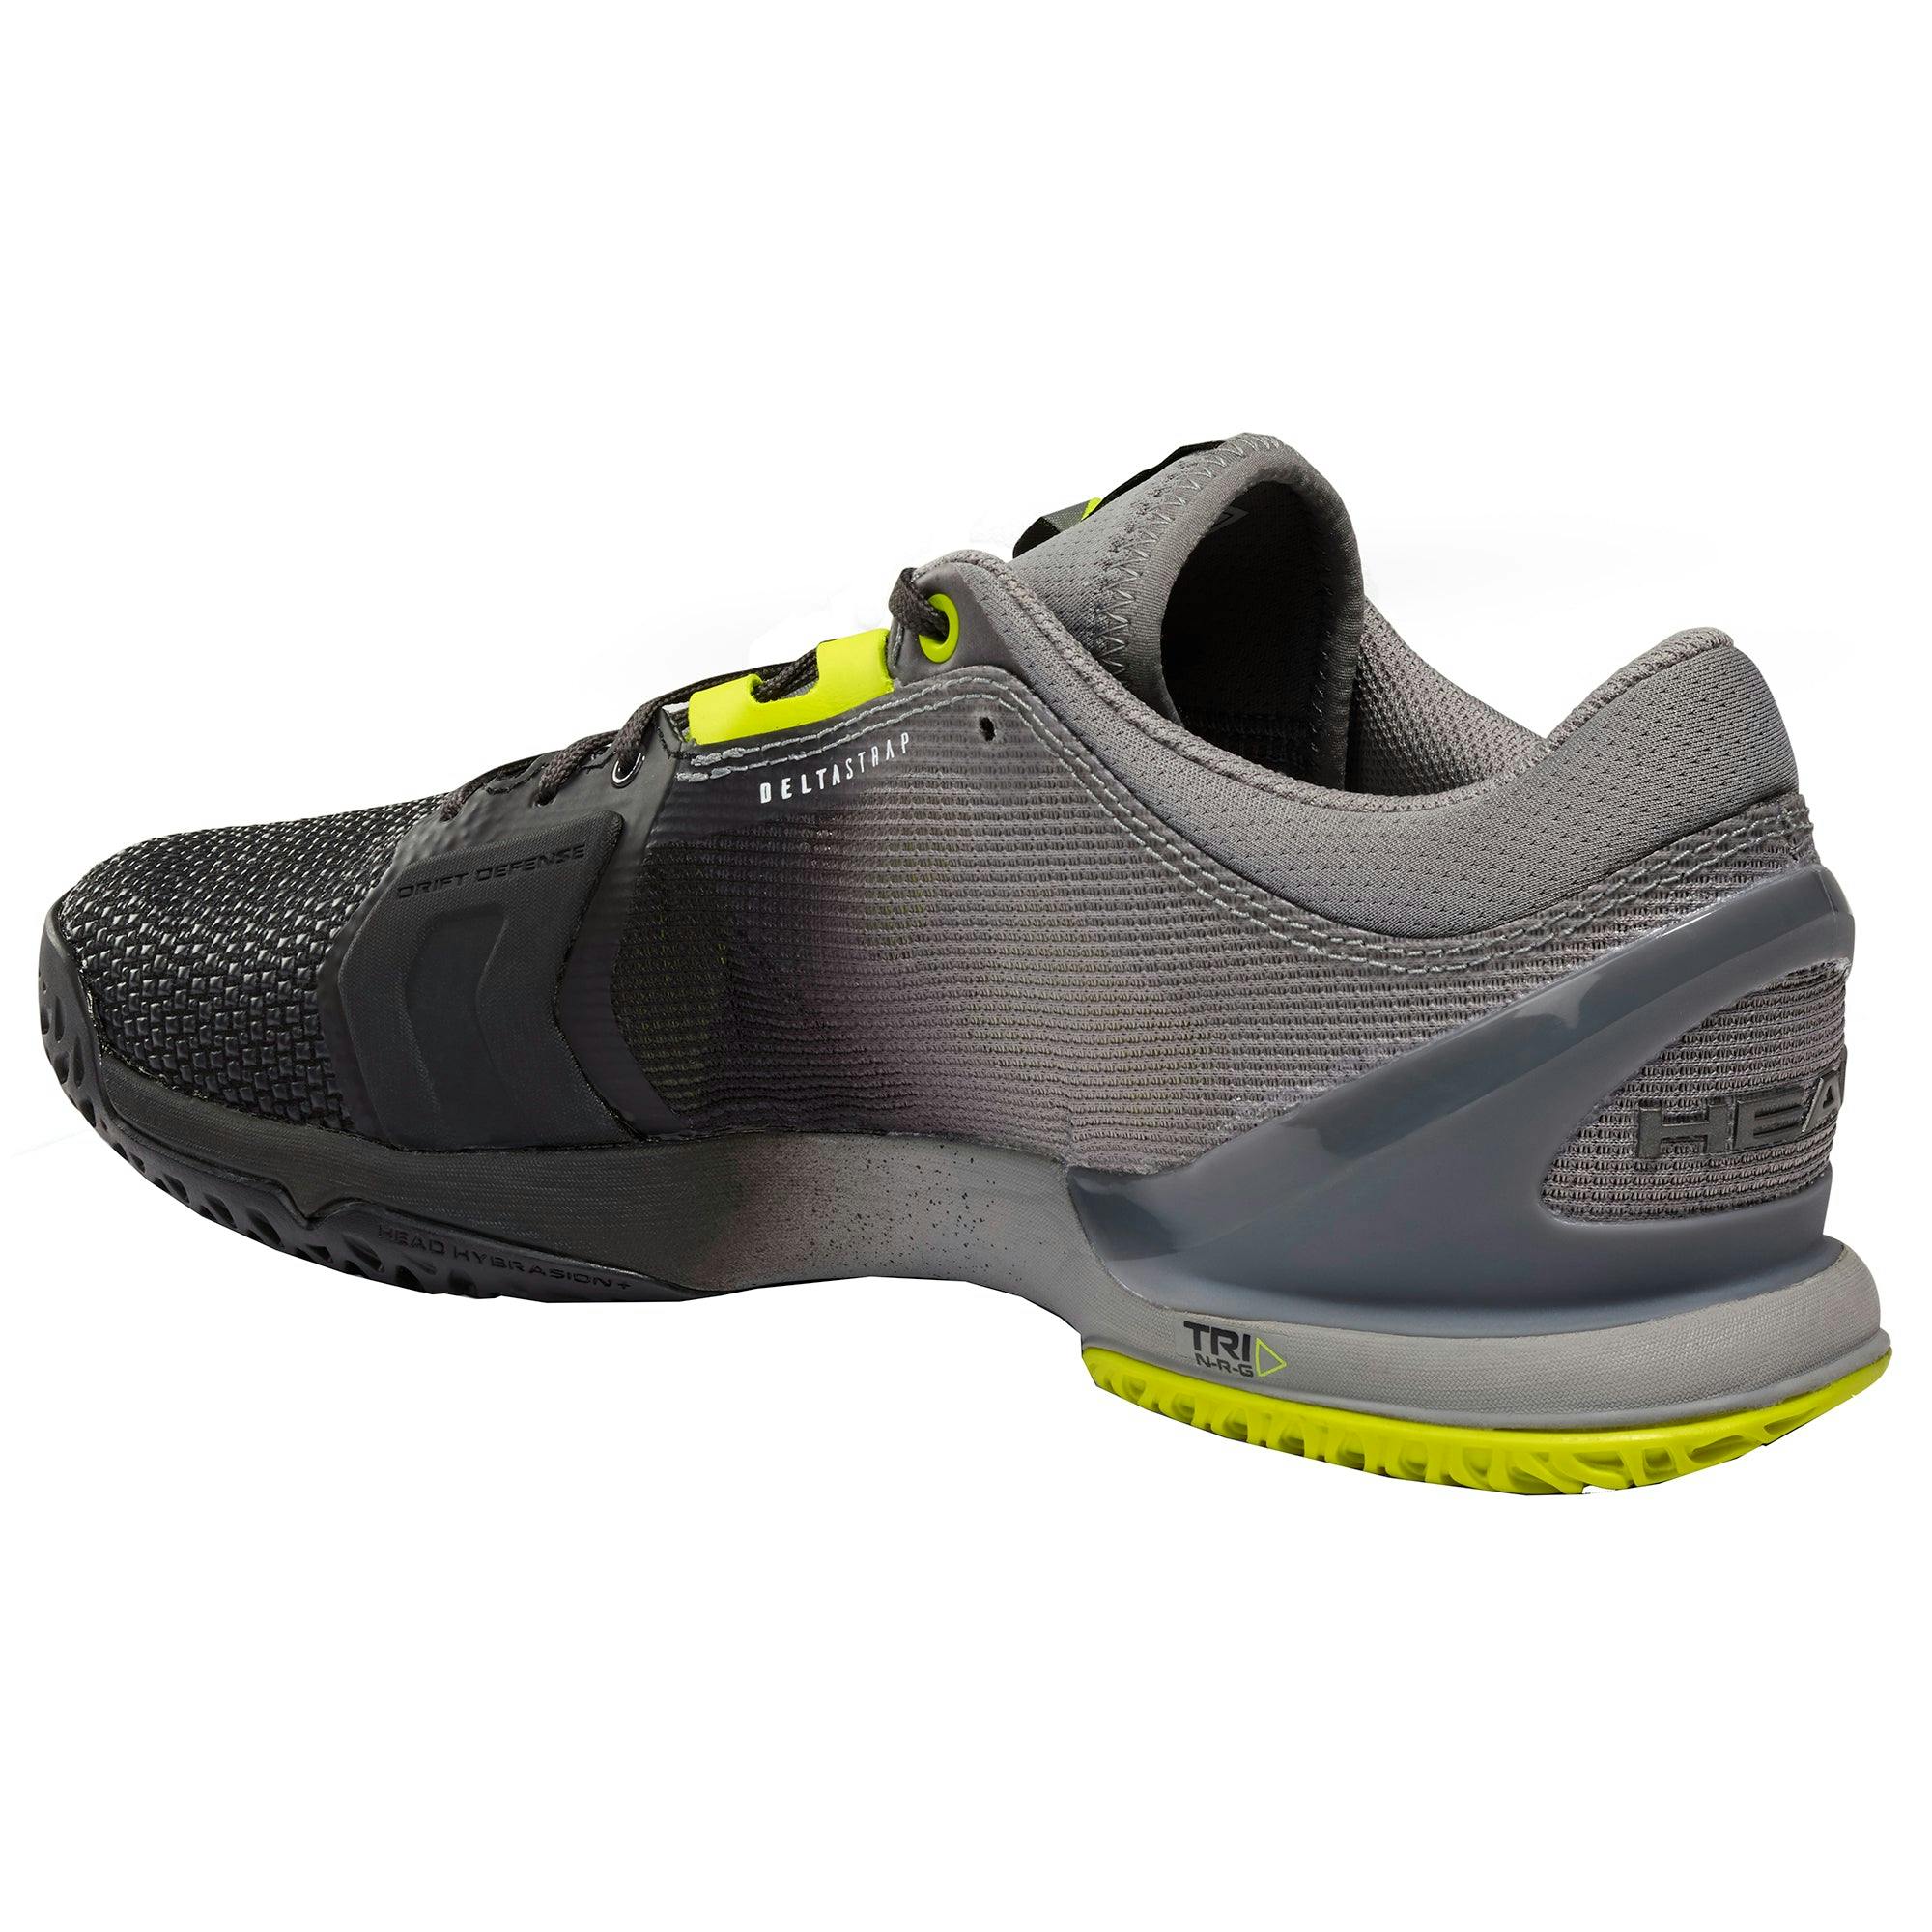 Head Sprint Pro 3.0 SF Mens Tennis Shoes - Black/Yellow / 10.0 / D Medium